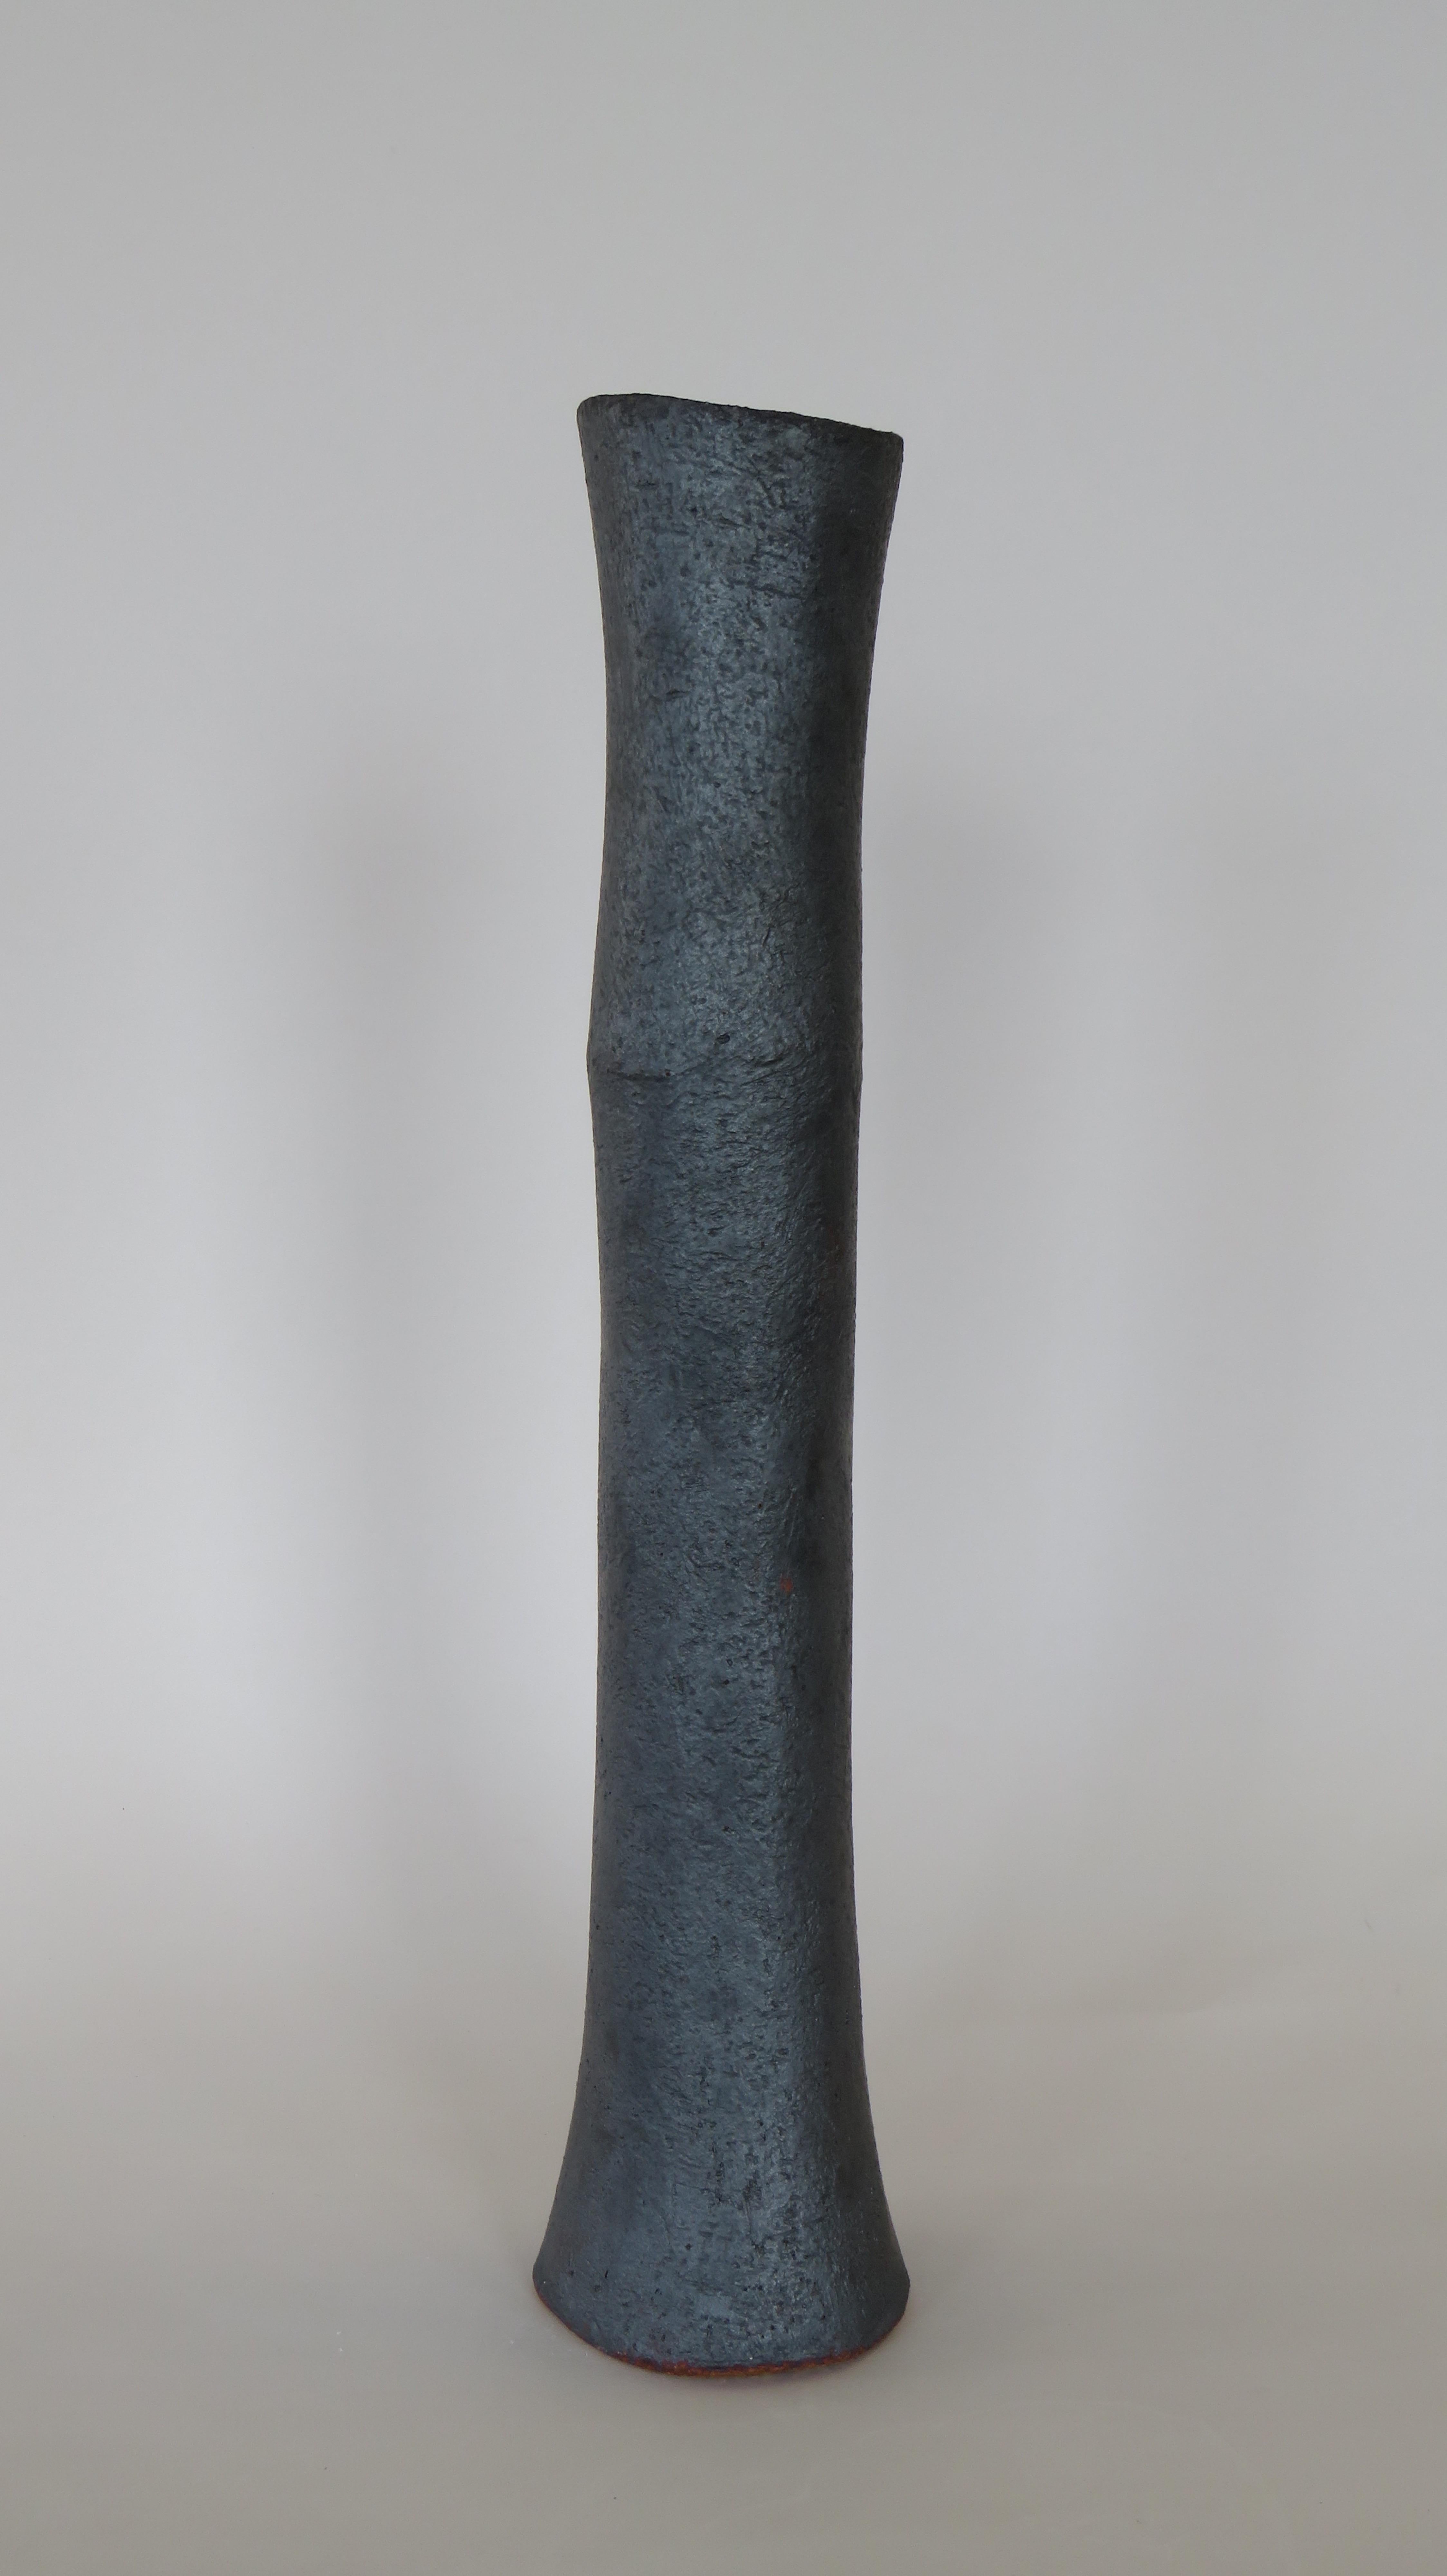 Hand-Crafted Tall, Tubular Metallic Black Ceramic Stoneware Vase, Hand Built 19 Inches Tall